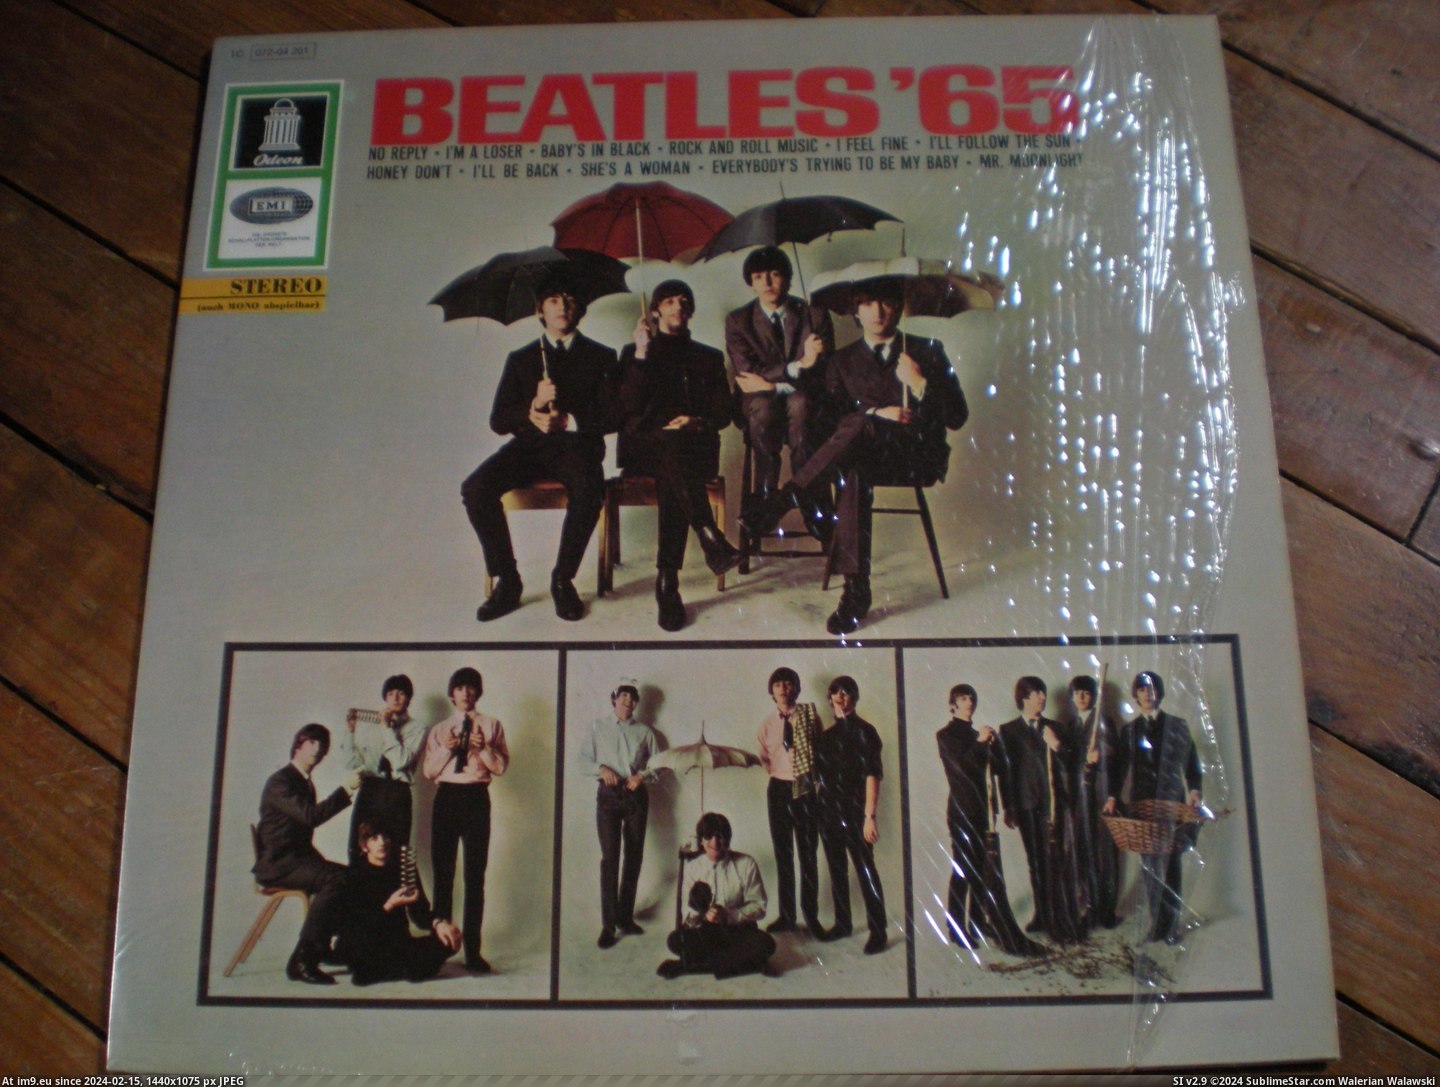  #Beatles  Beatles 65 5 Pic. (Obraz z album new 1))